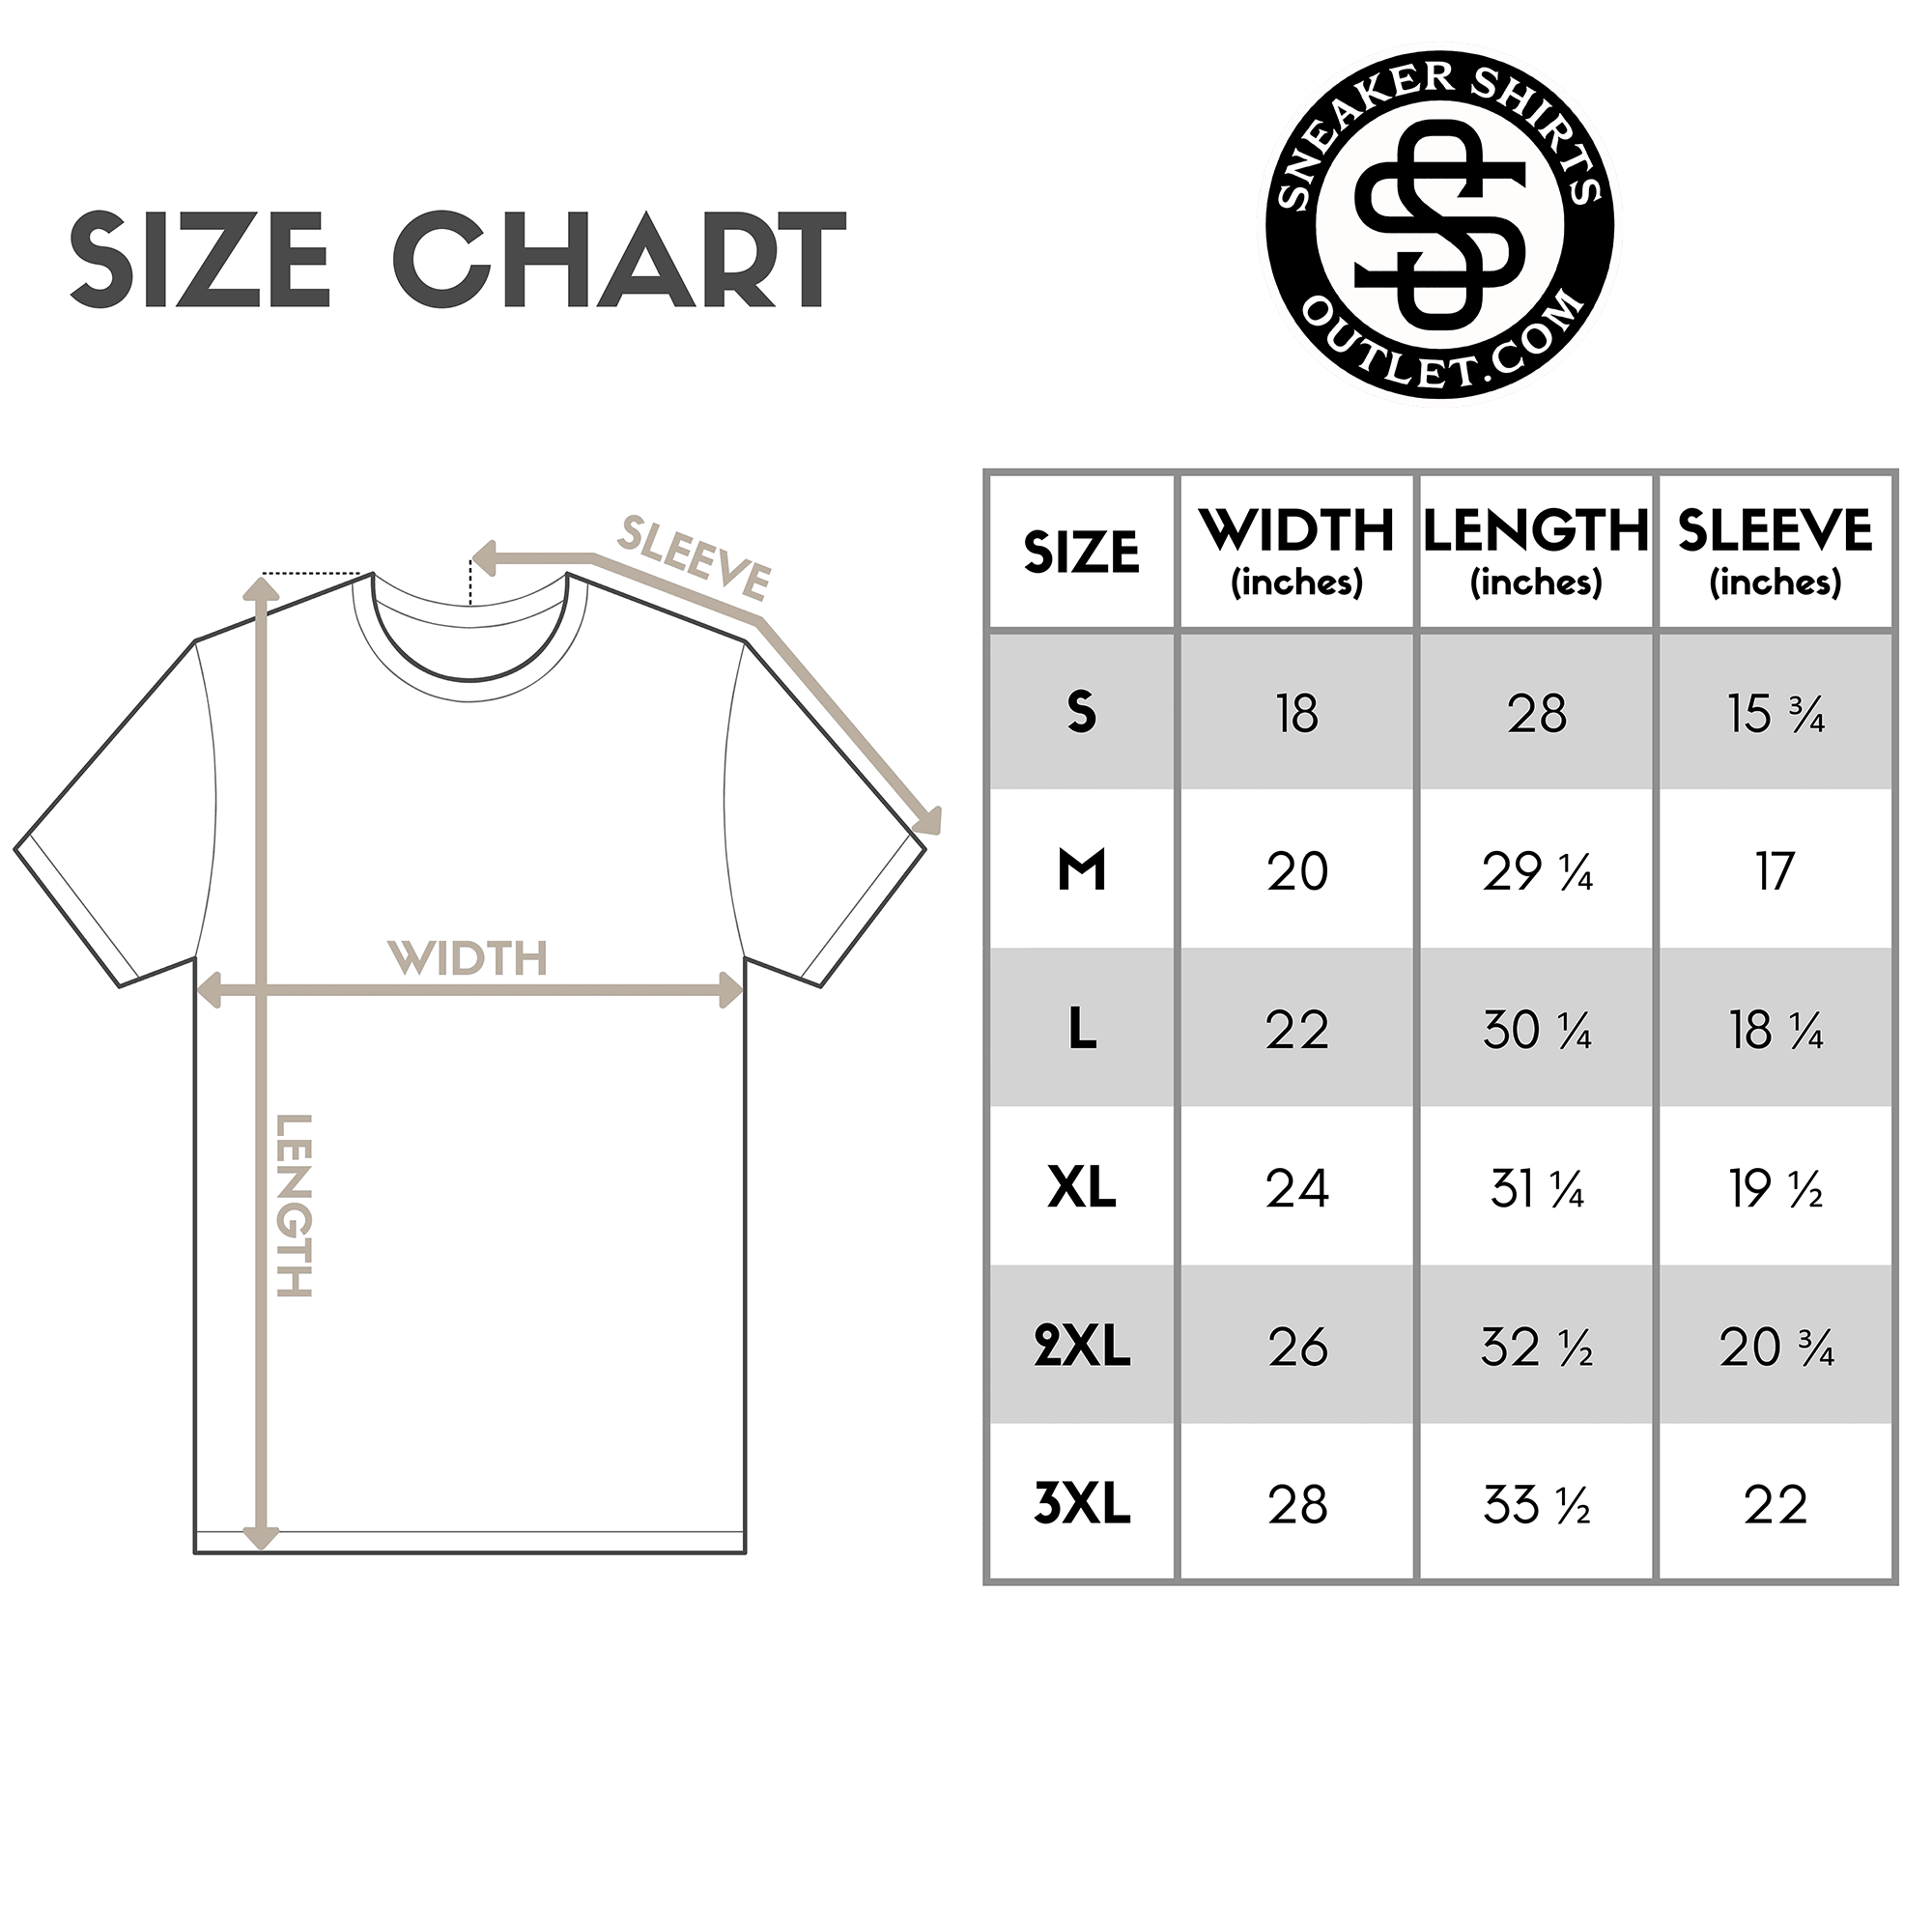 size chart for Drippin Shirt Jordan 14s Low Shocking Pink photo